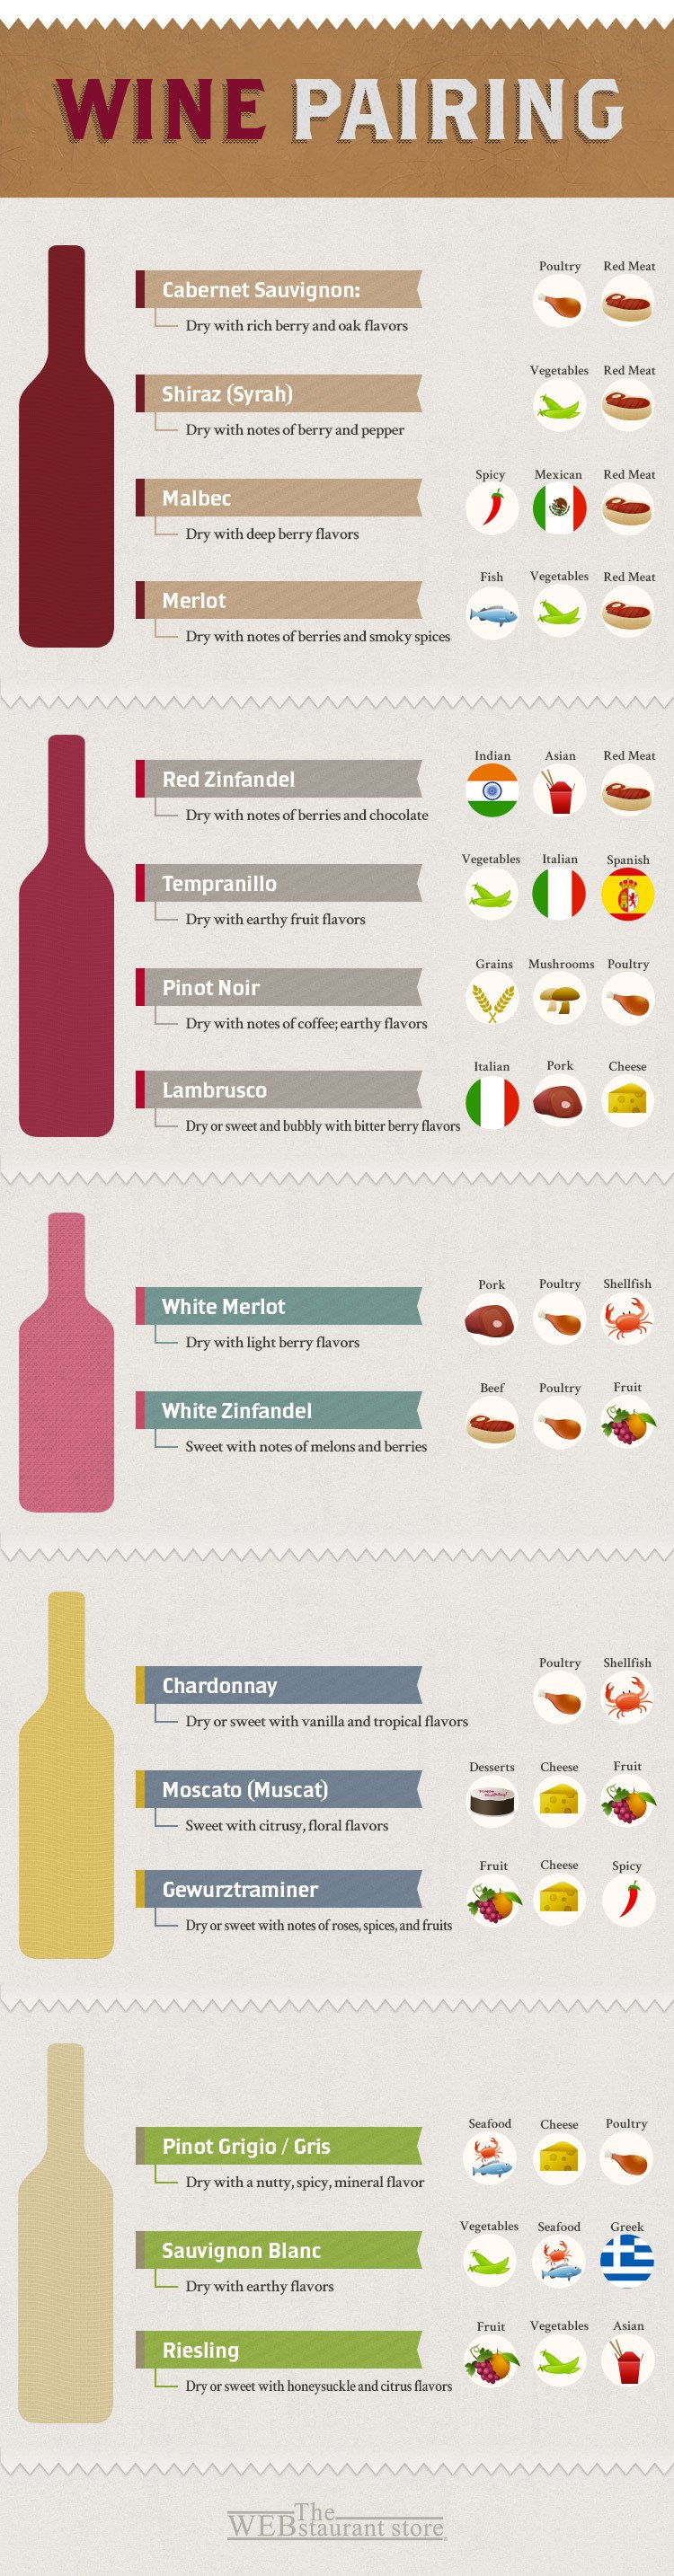 wine serving temperature guide pdf